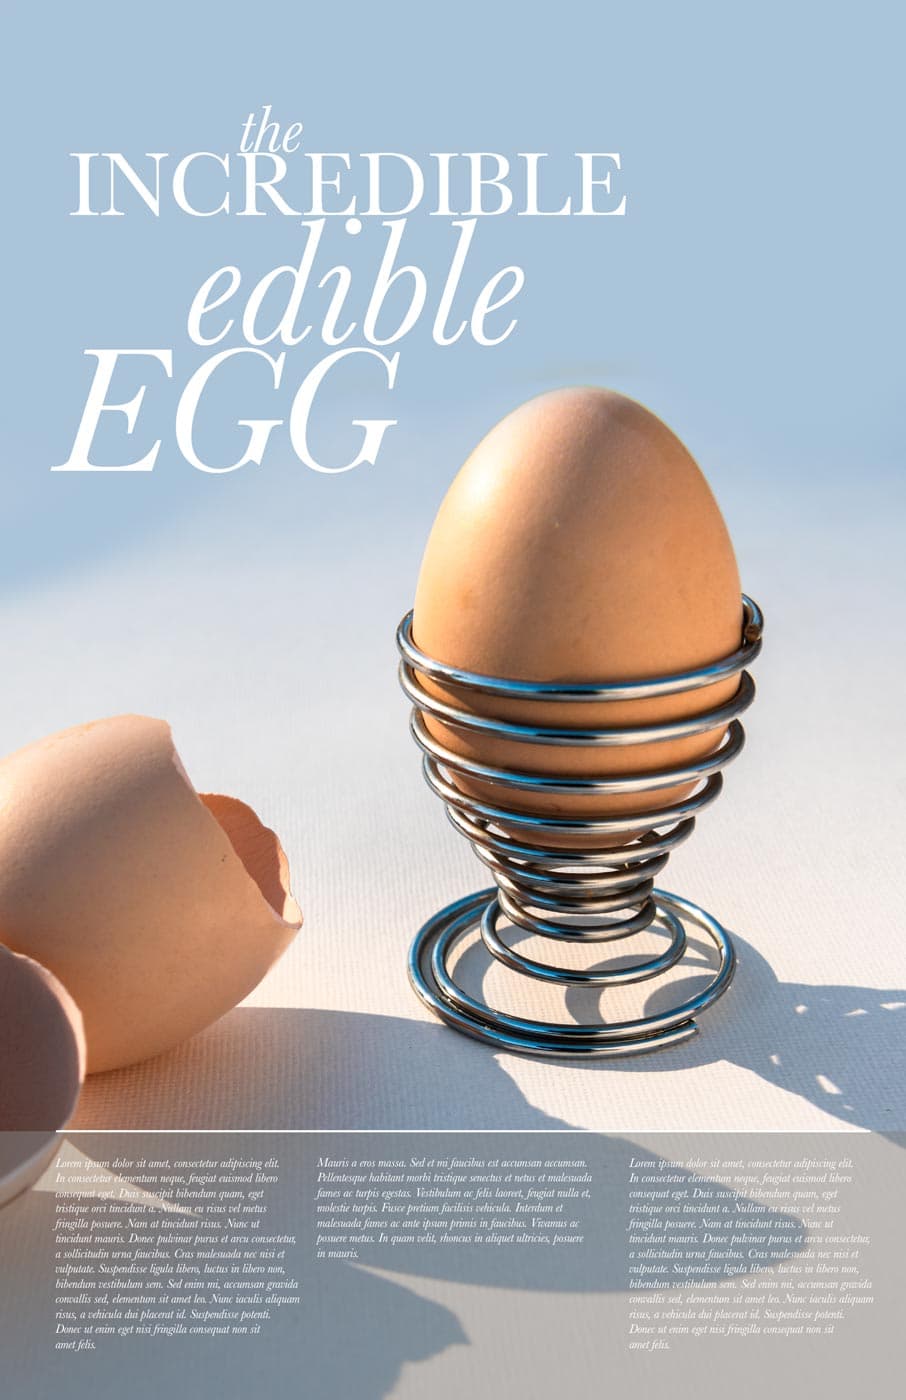 The incredible edible egg advertisement